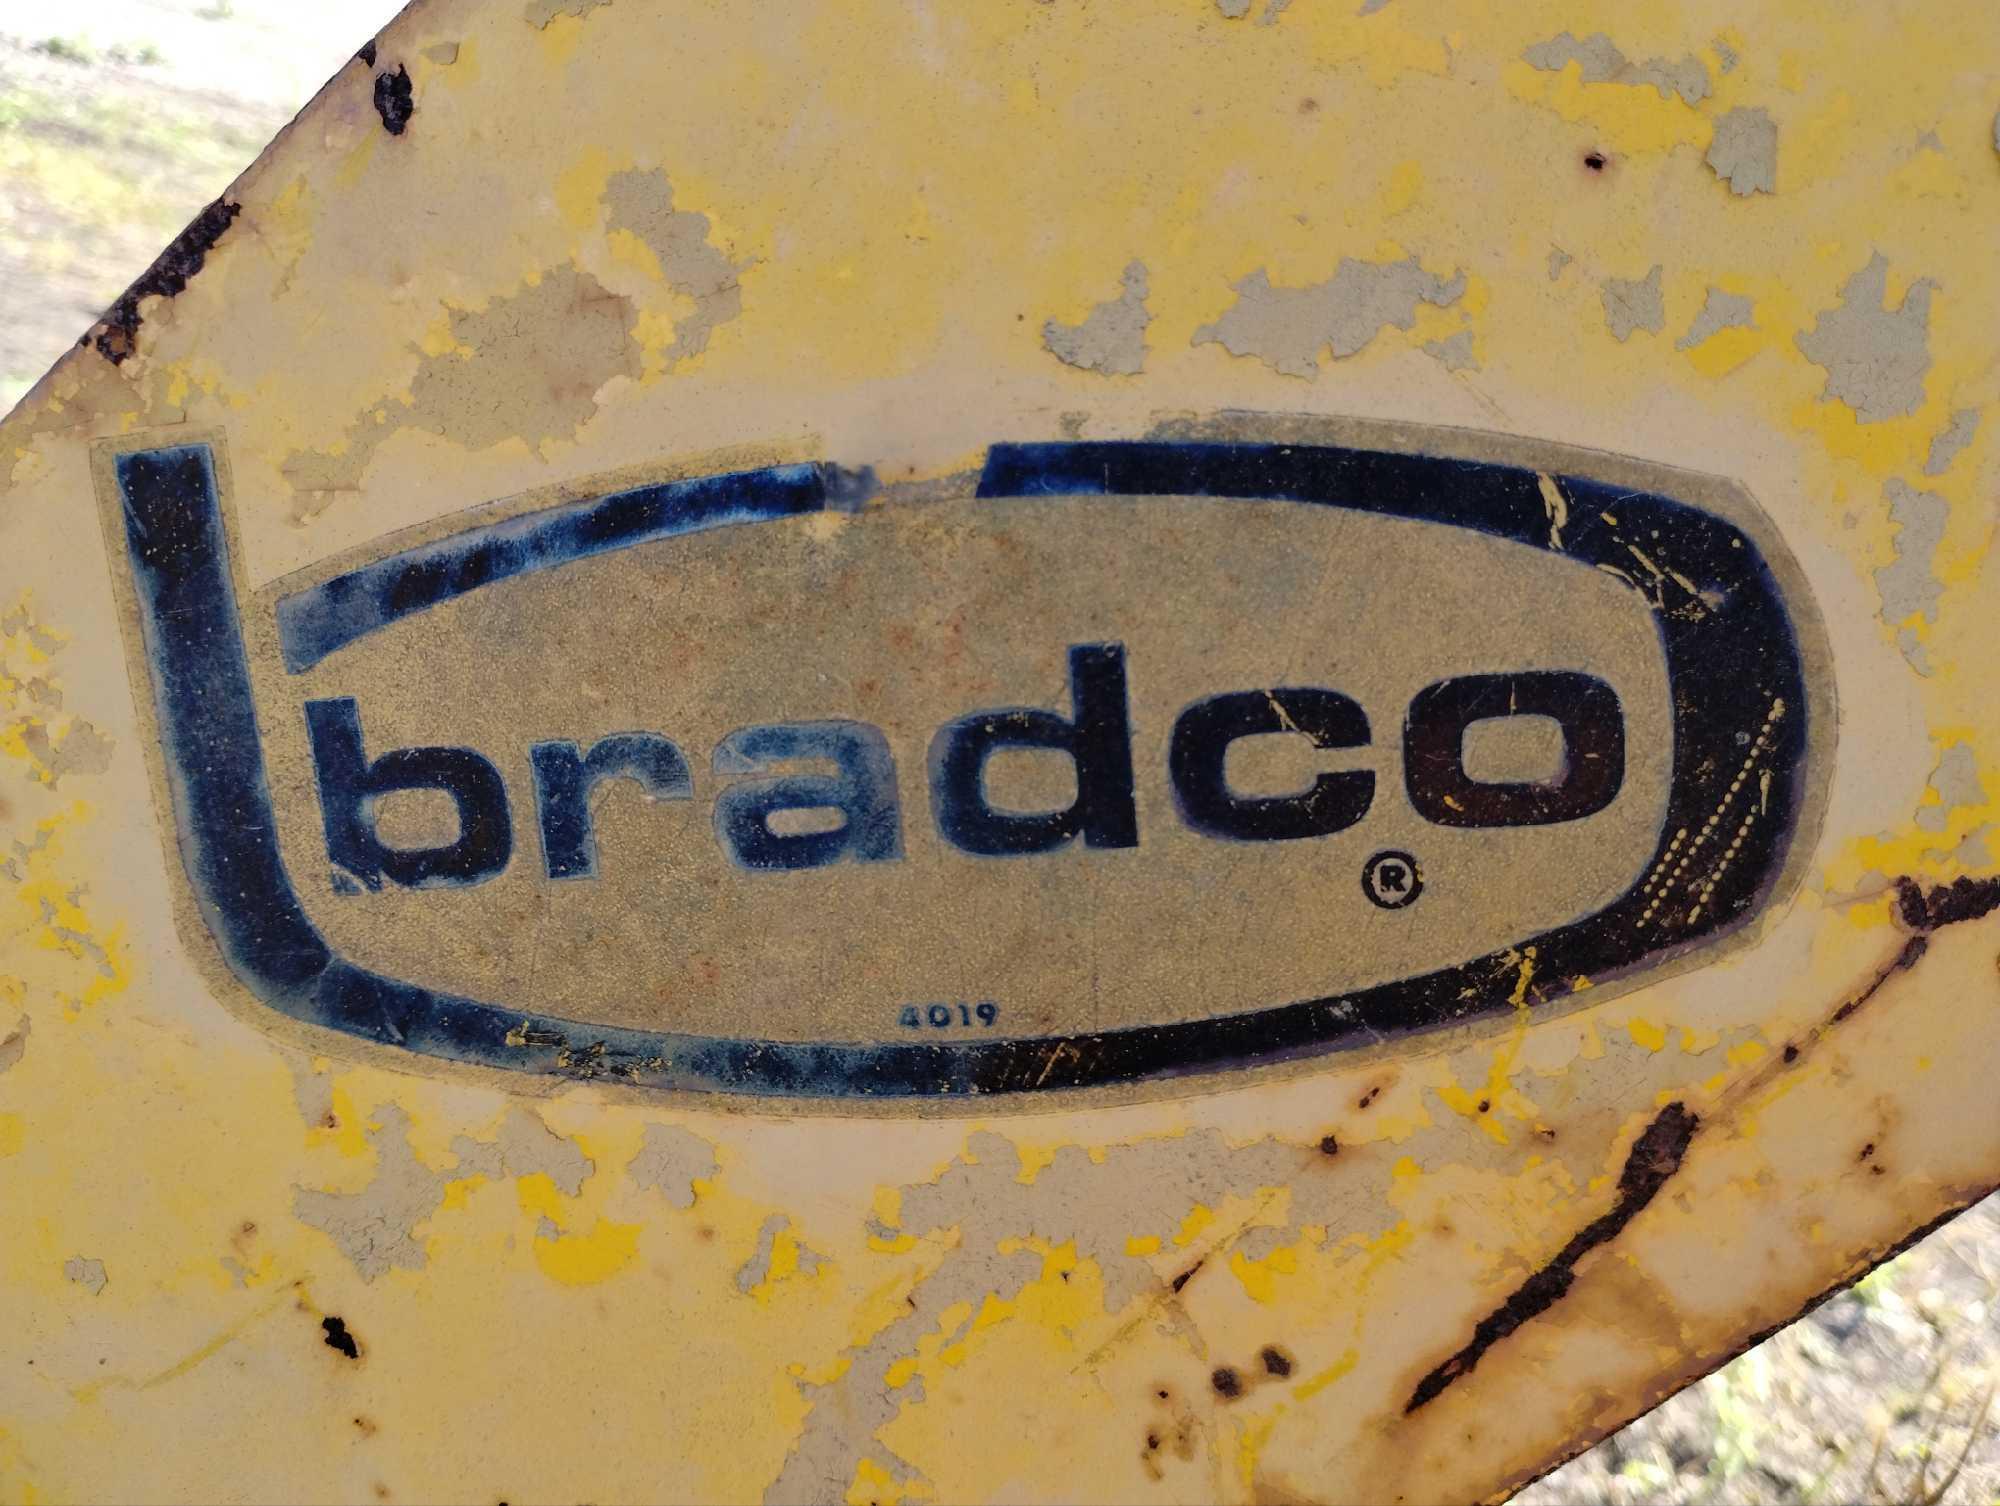 Bradco Backhoe Attachment